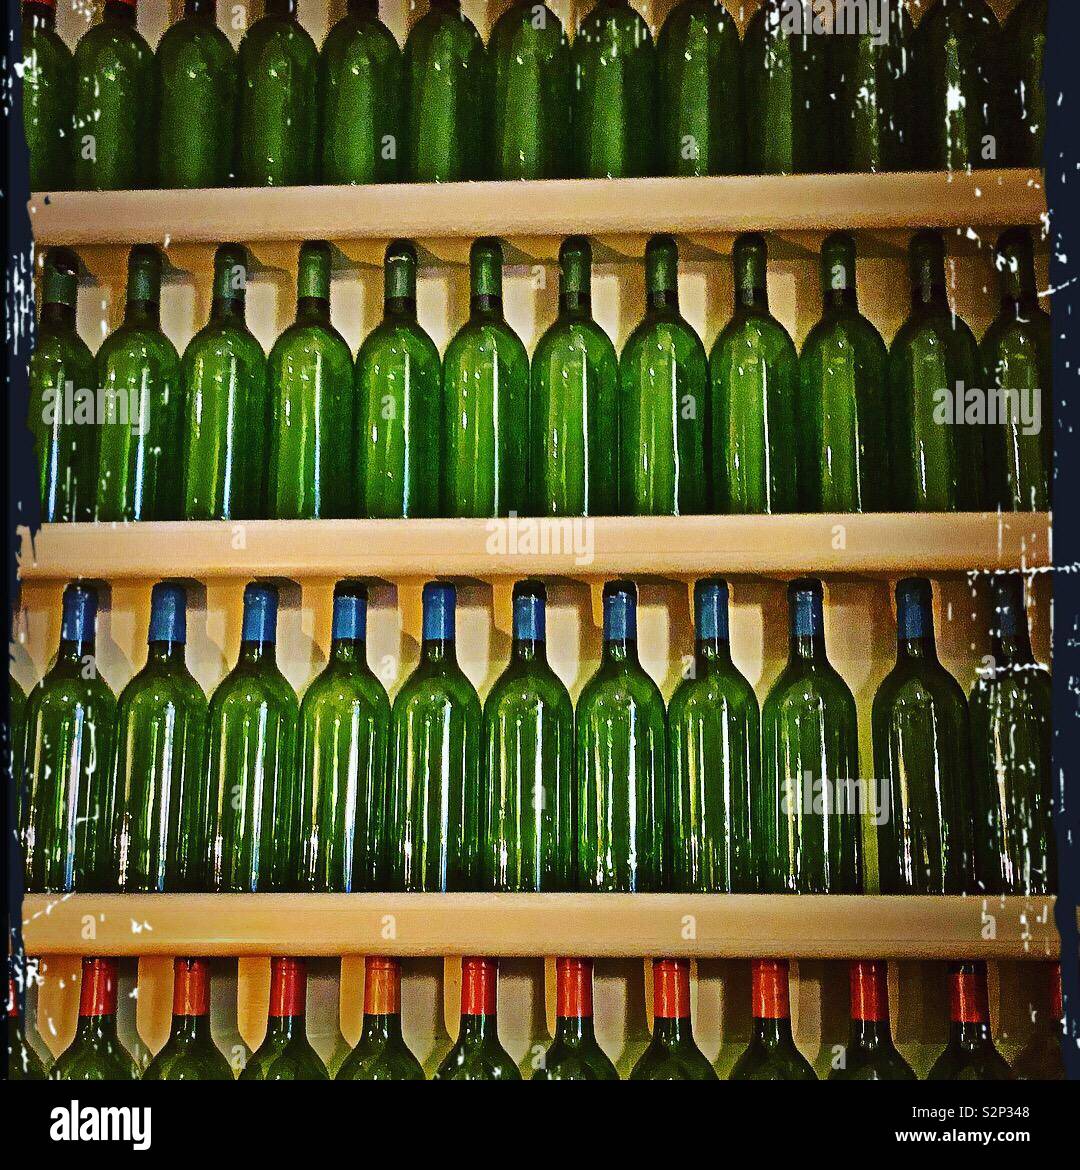 Ten Green Bottles standing on a wall Stock Photo - Alamy